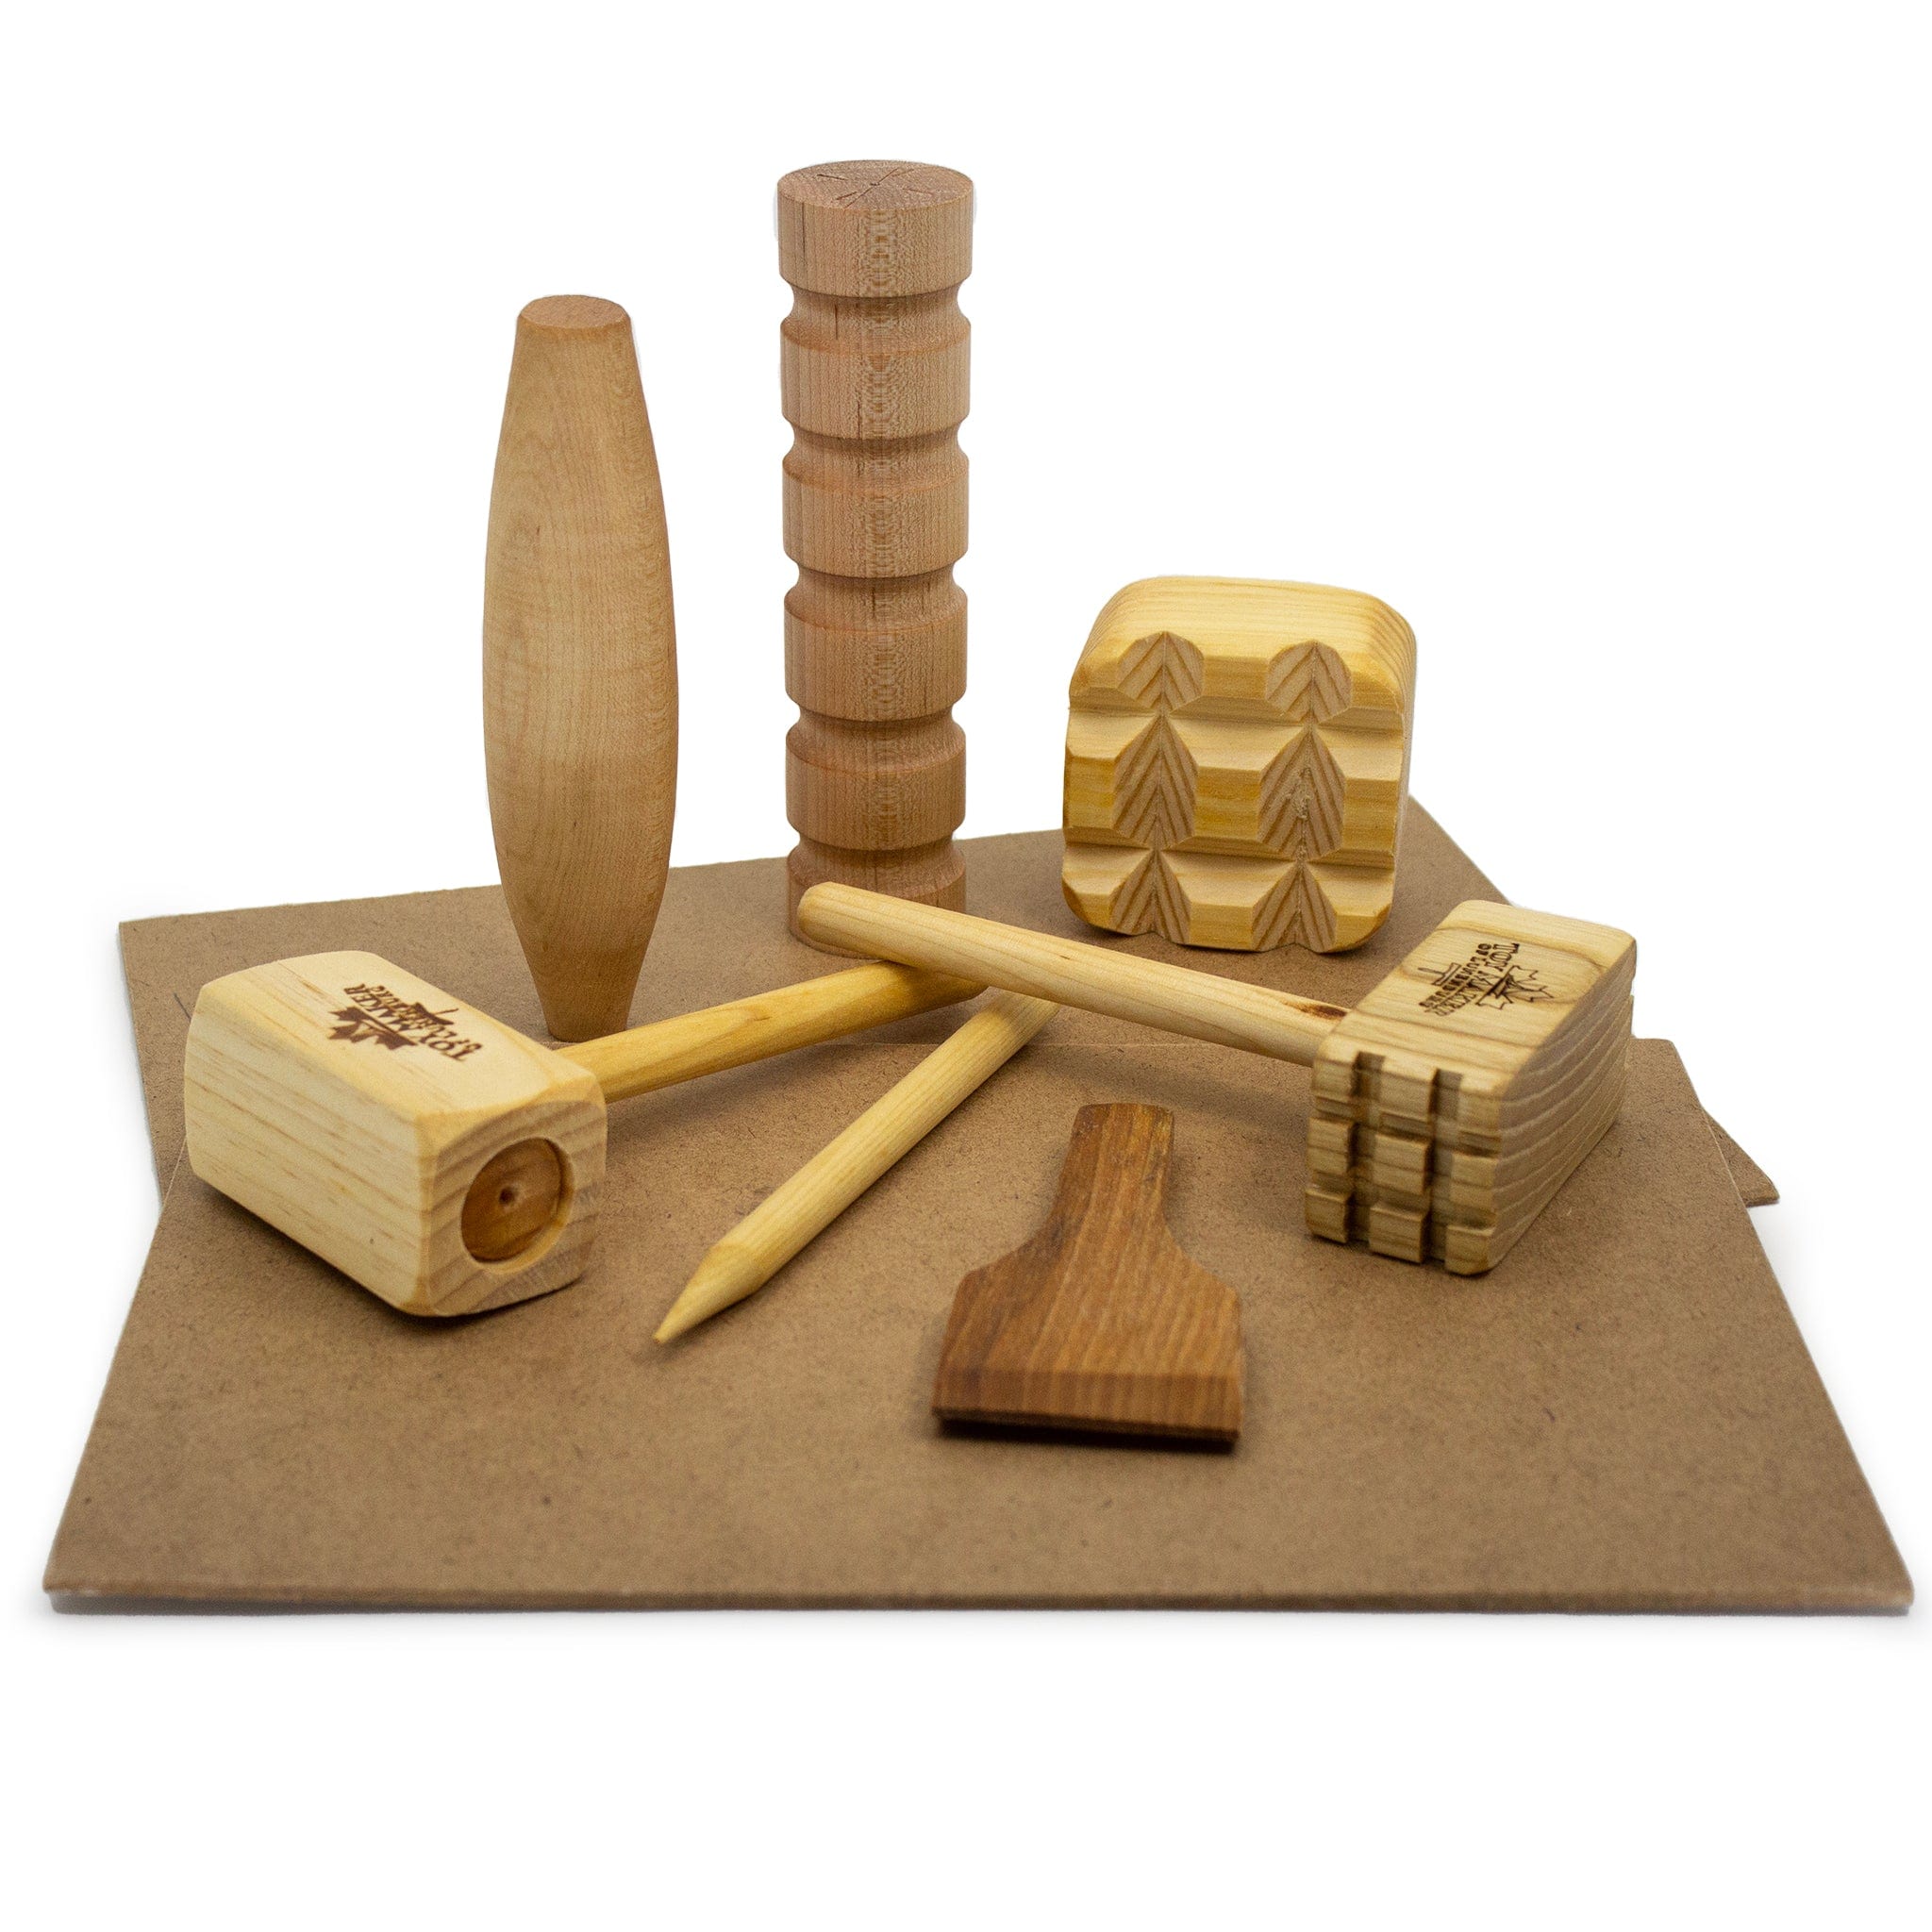 Wooden Playdough Tools and Accessories – Carla's Treasure